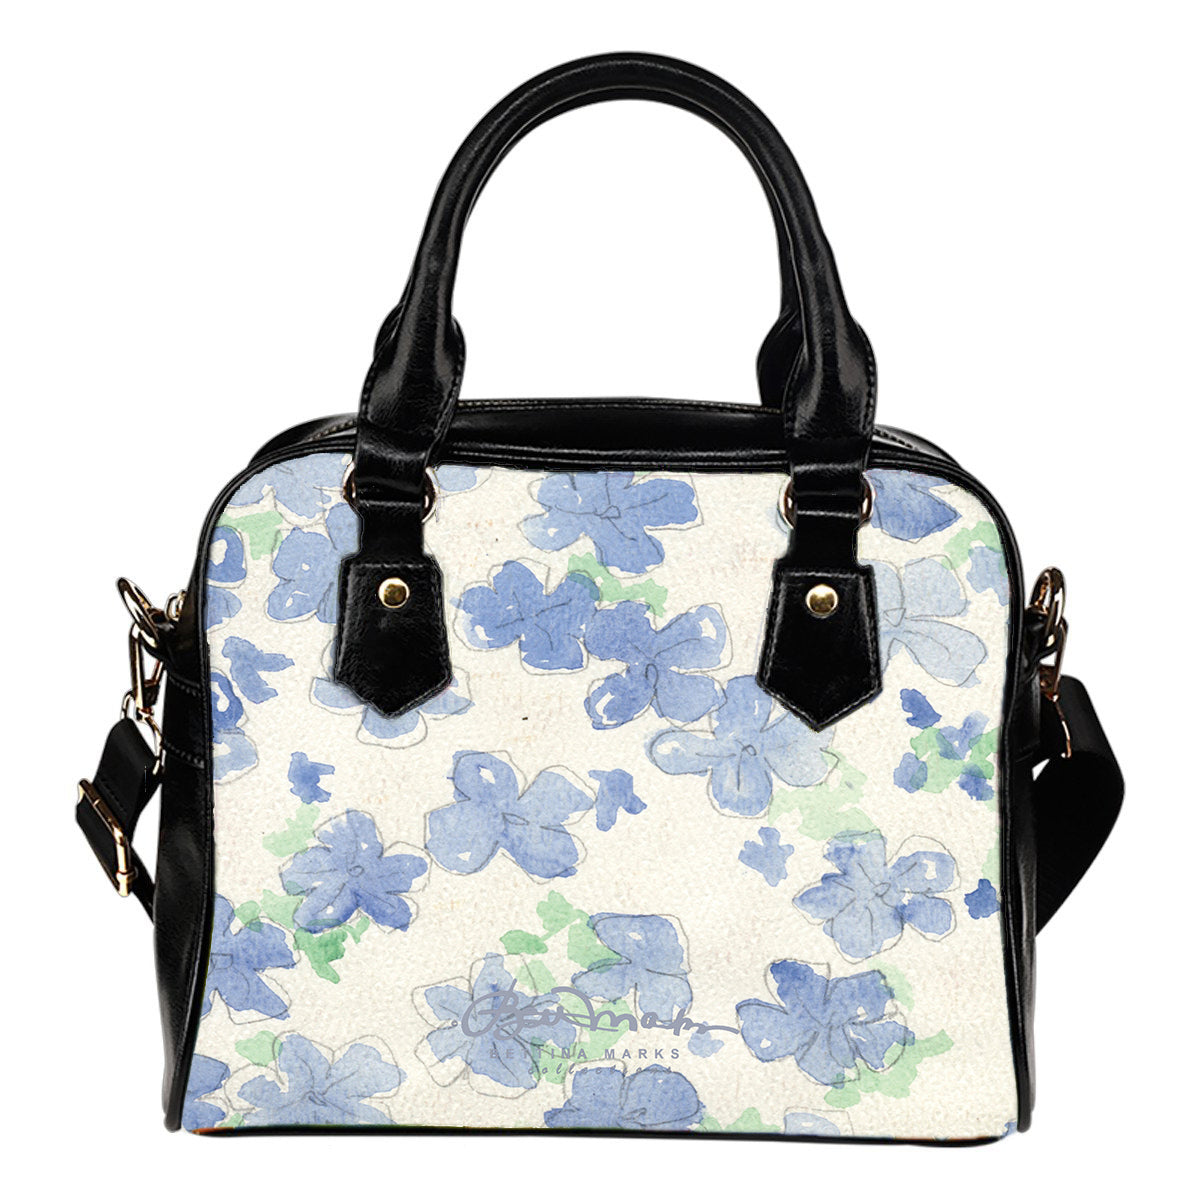 Blu&White Watercolor Floral Hand Bag w Shoulder Strap